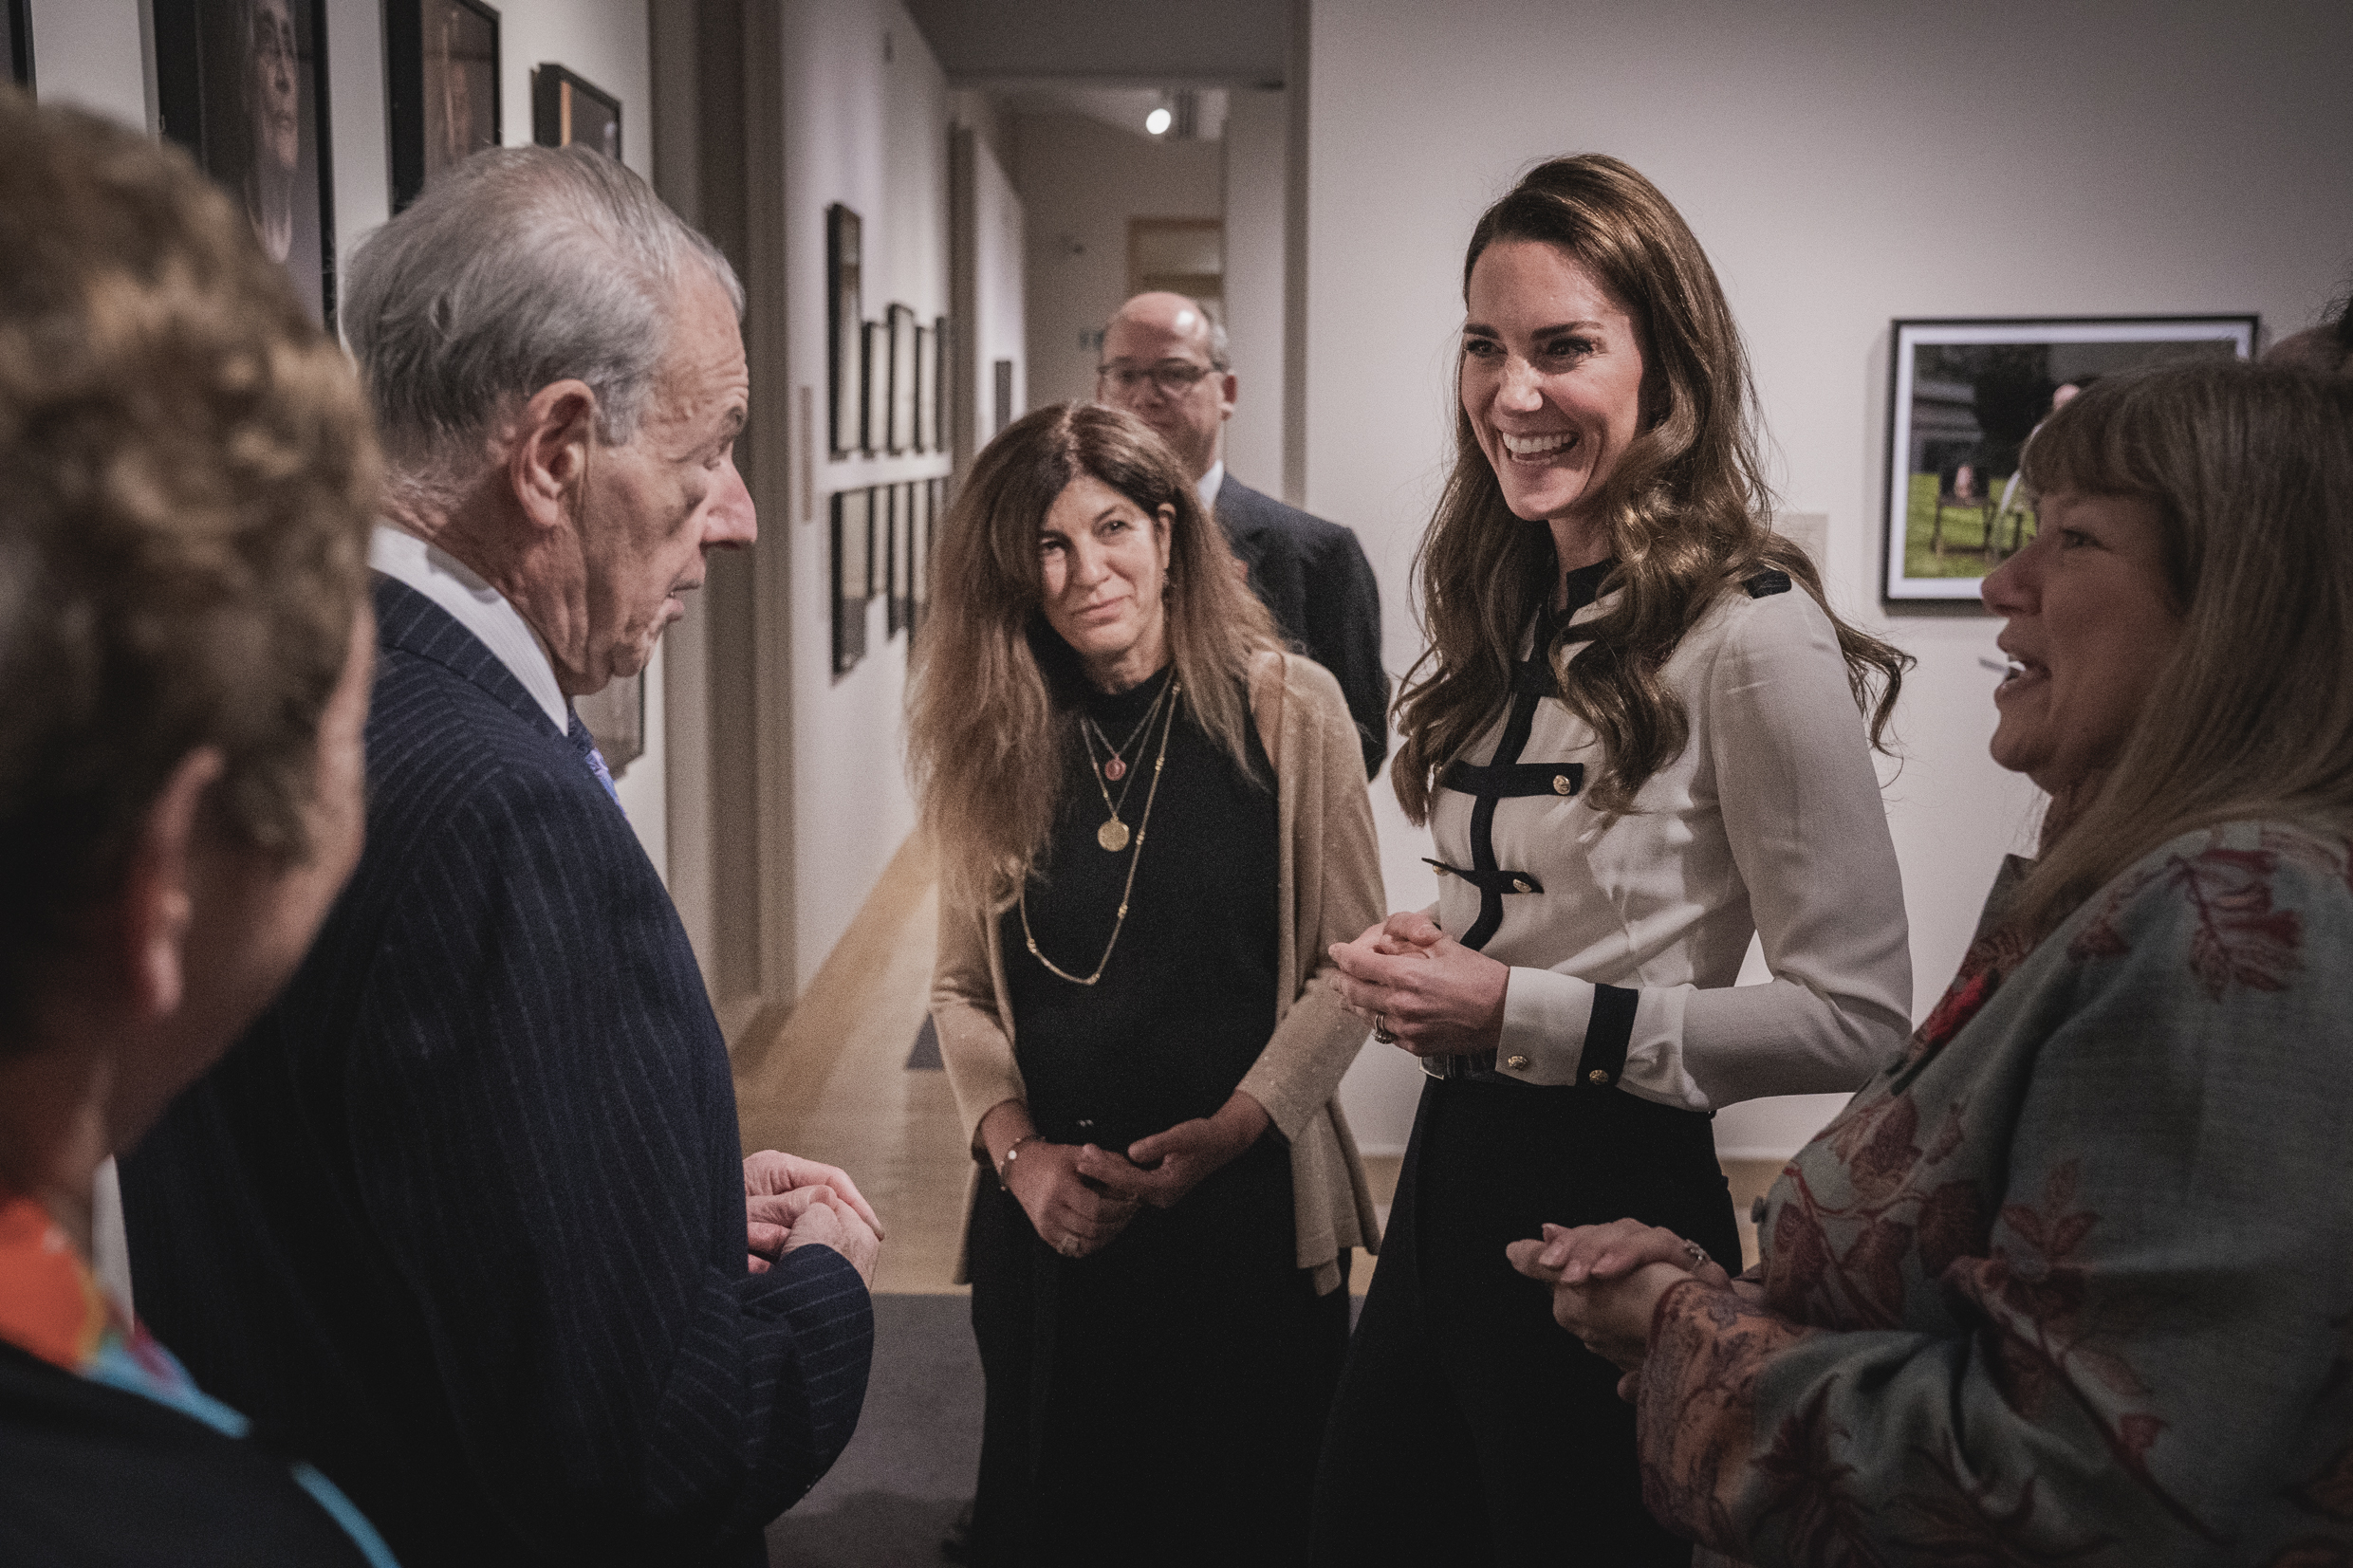 HRH Duchess of Cambridge visits IWM London